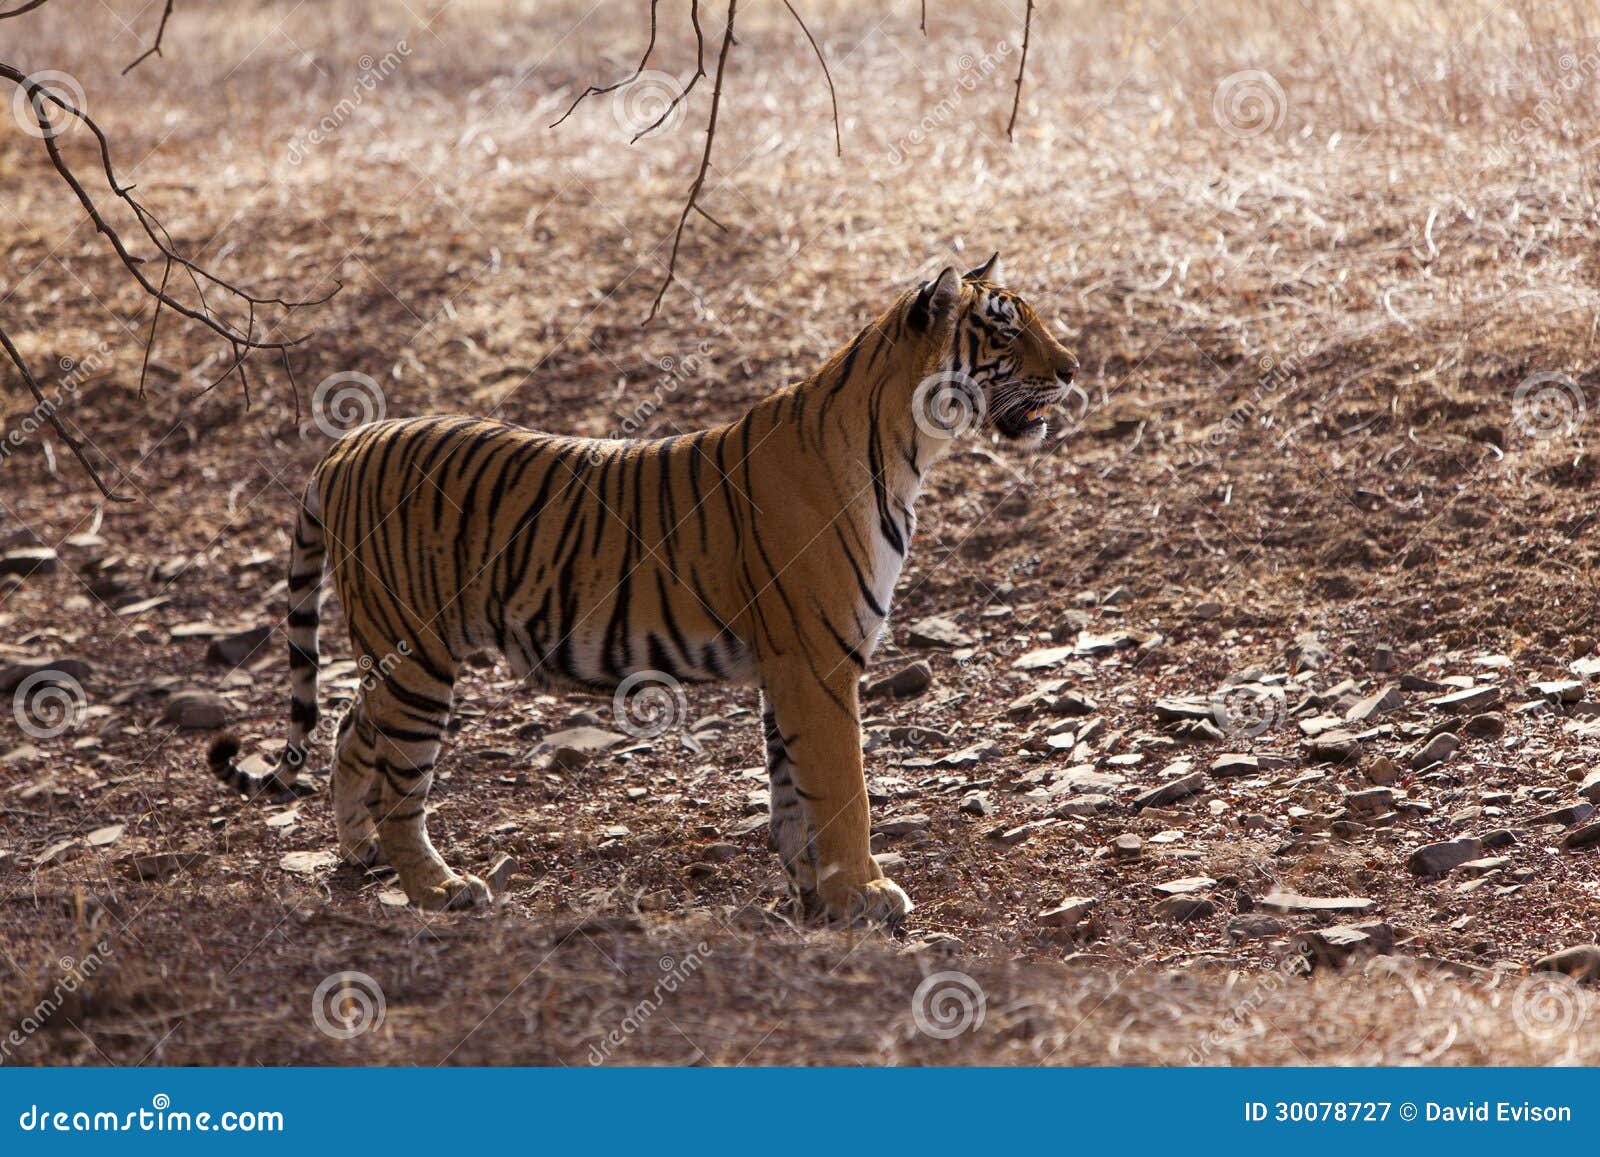 side profile of a female tigress,